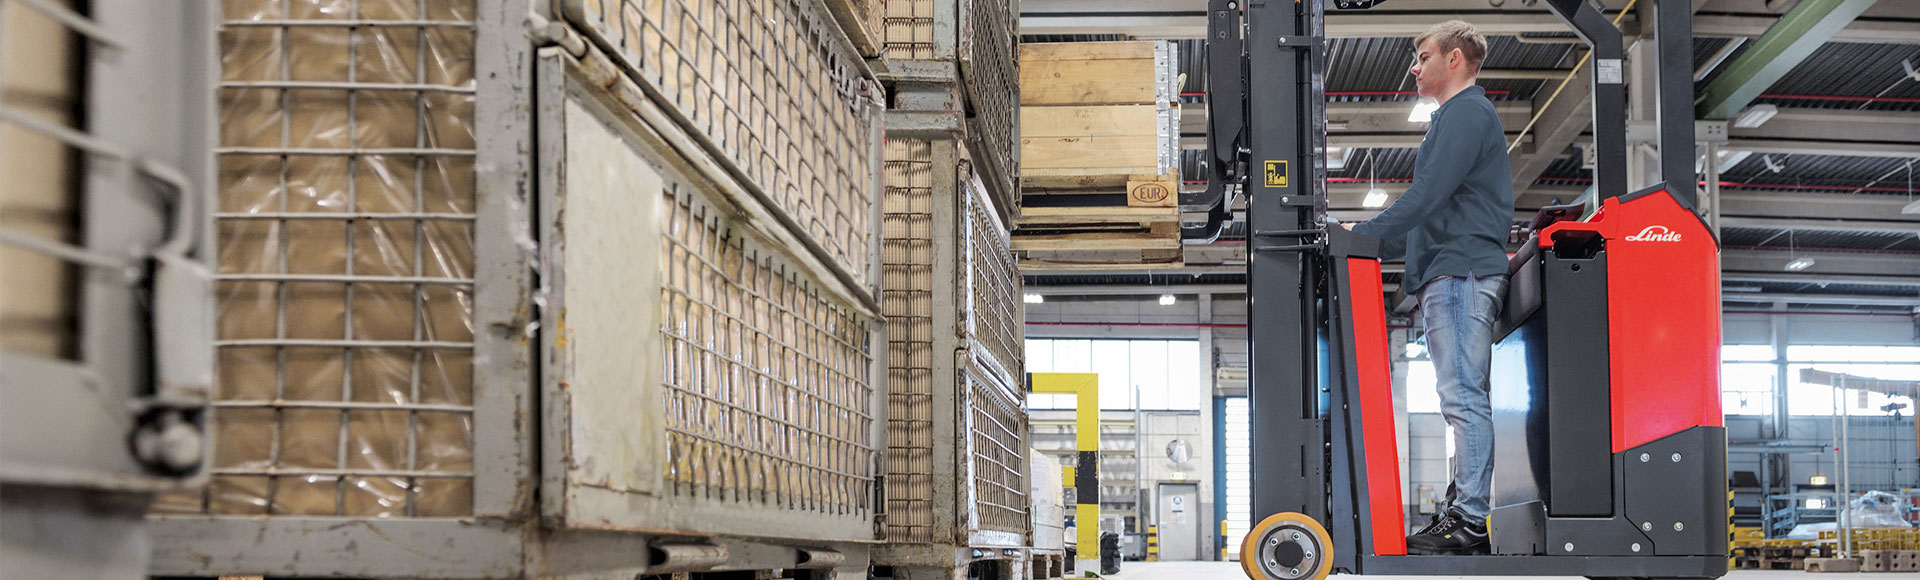 Linde E10 makes warehouse logistics easy